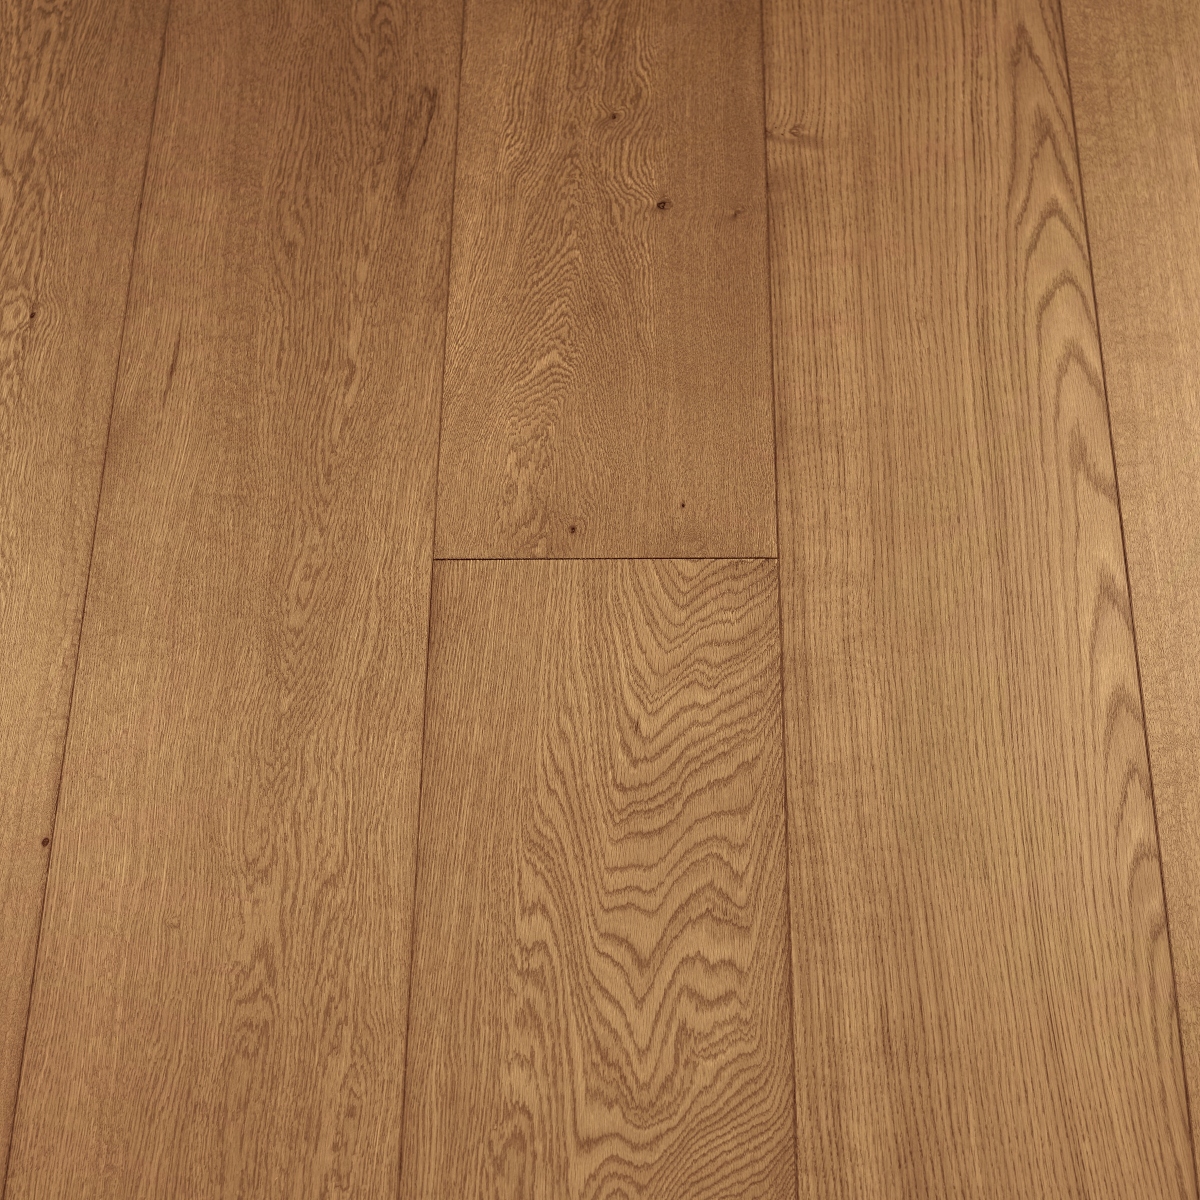 Chestnut 190mm x 18mm x 1900mm Bespoke Wood Flooring